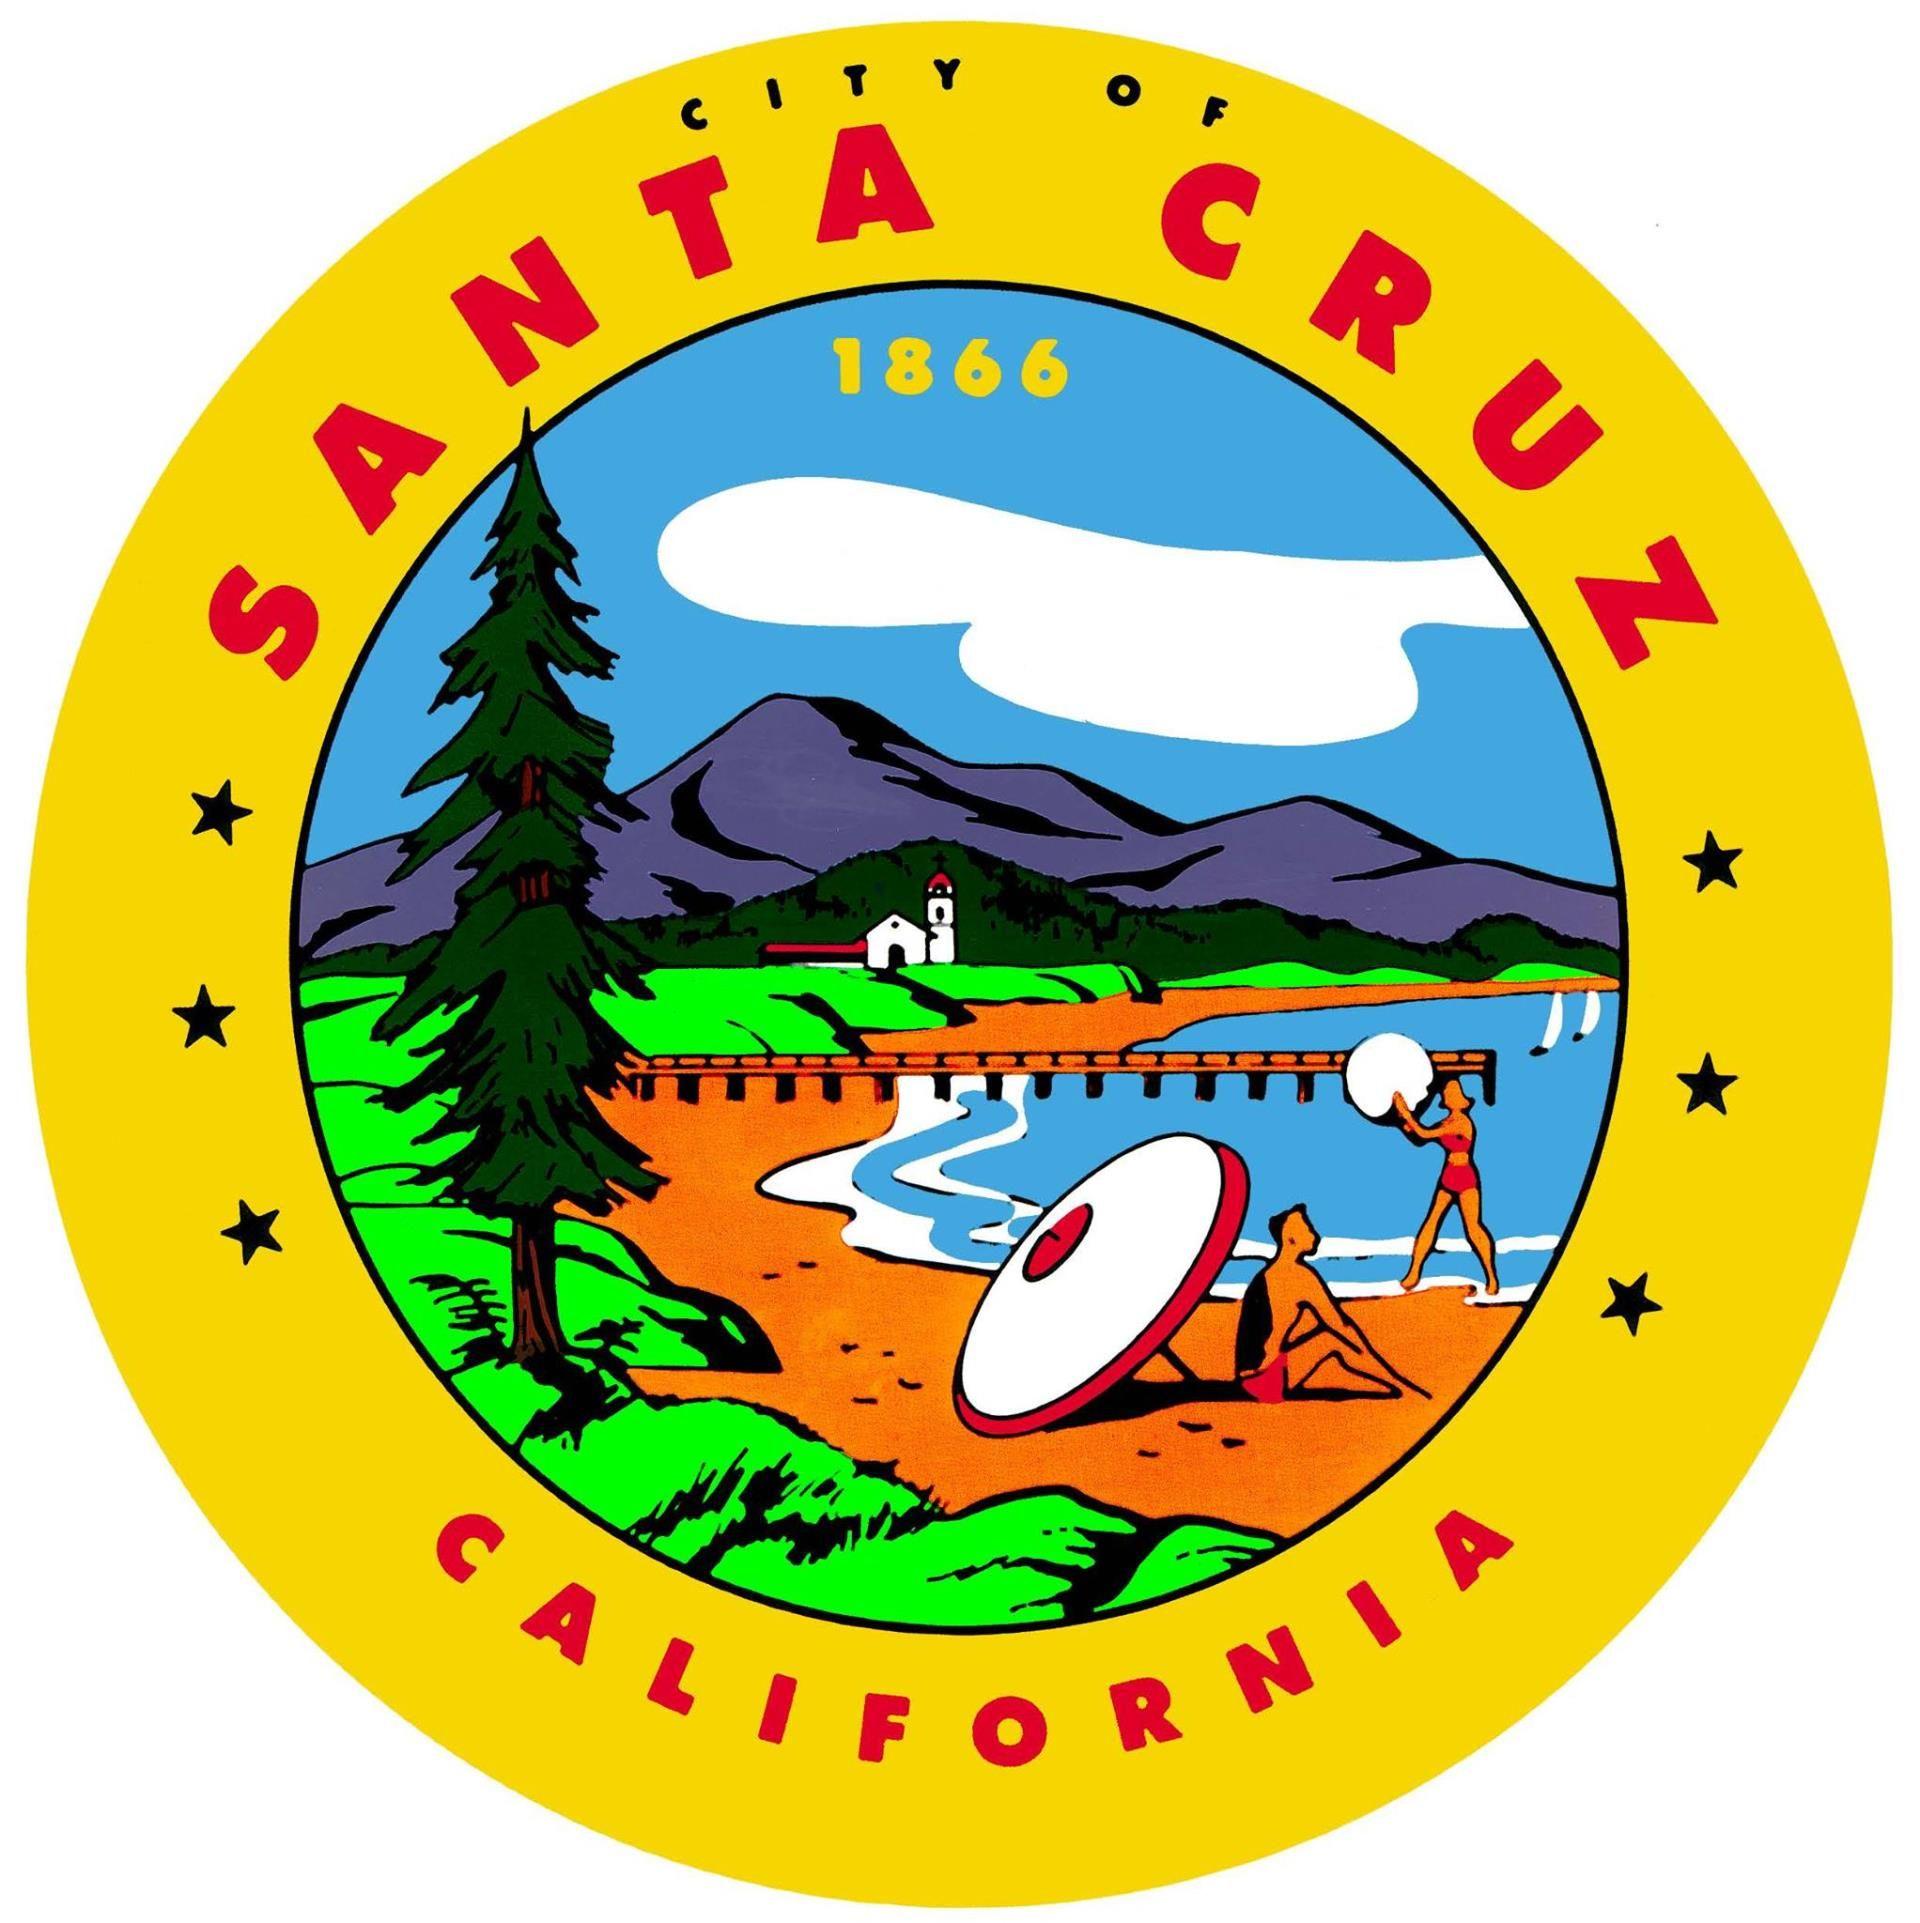 City of Santa Cruz Logo - City of Santa Cruz